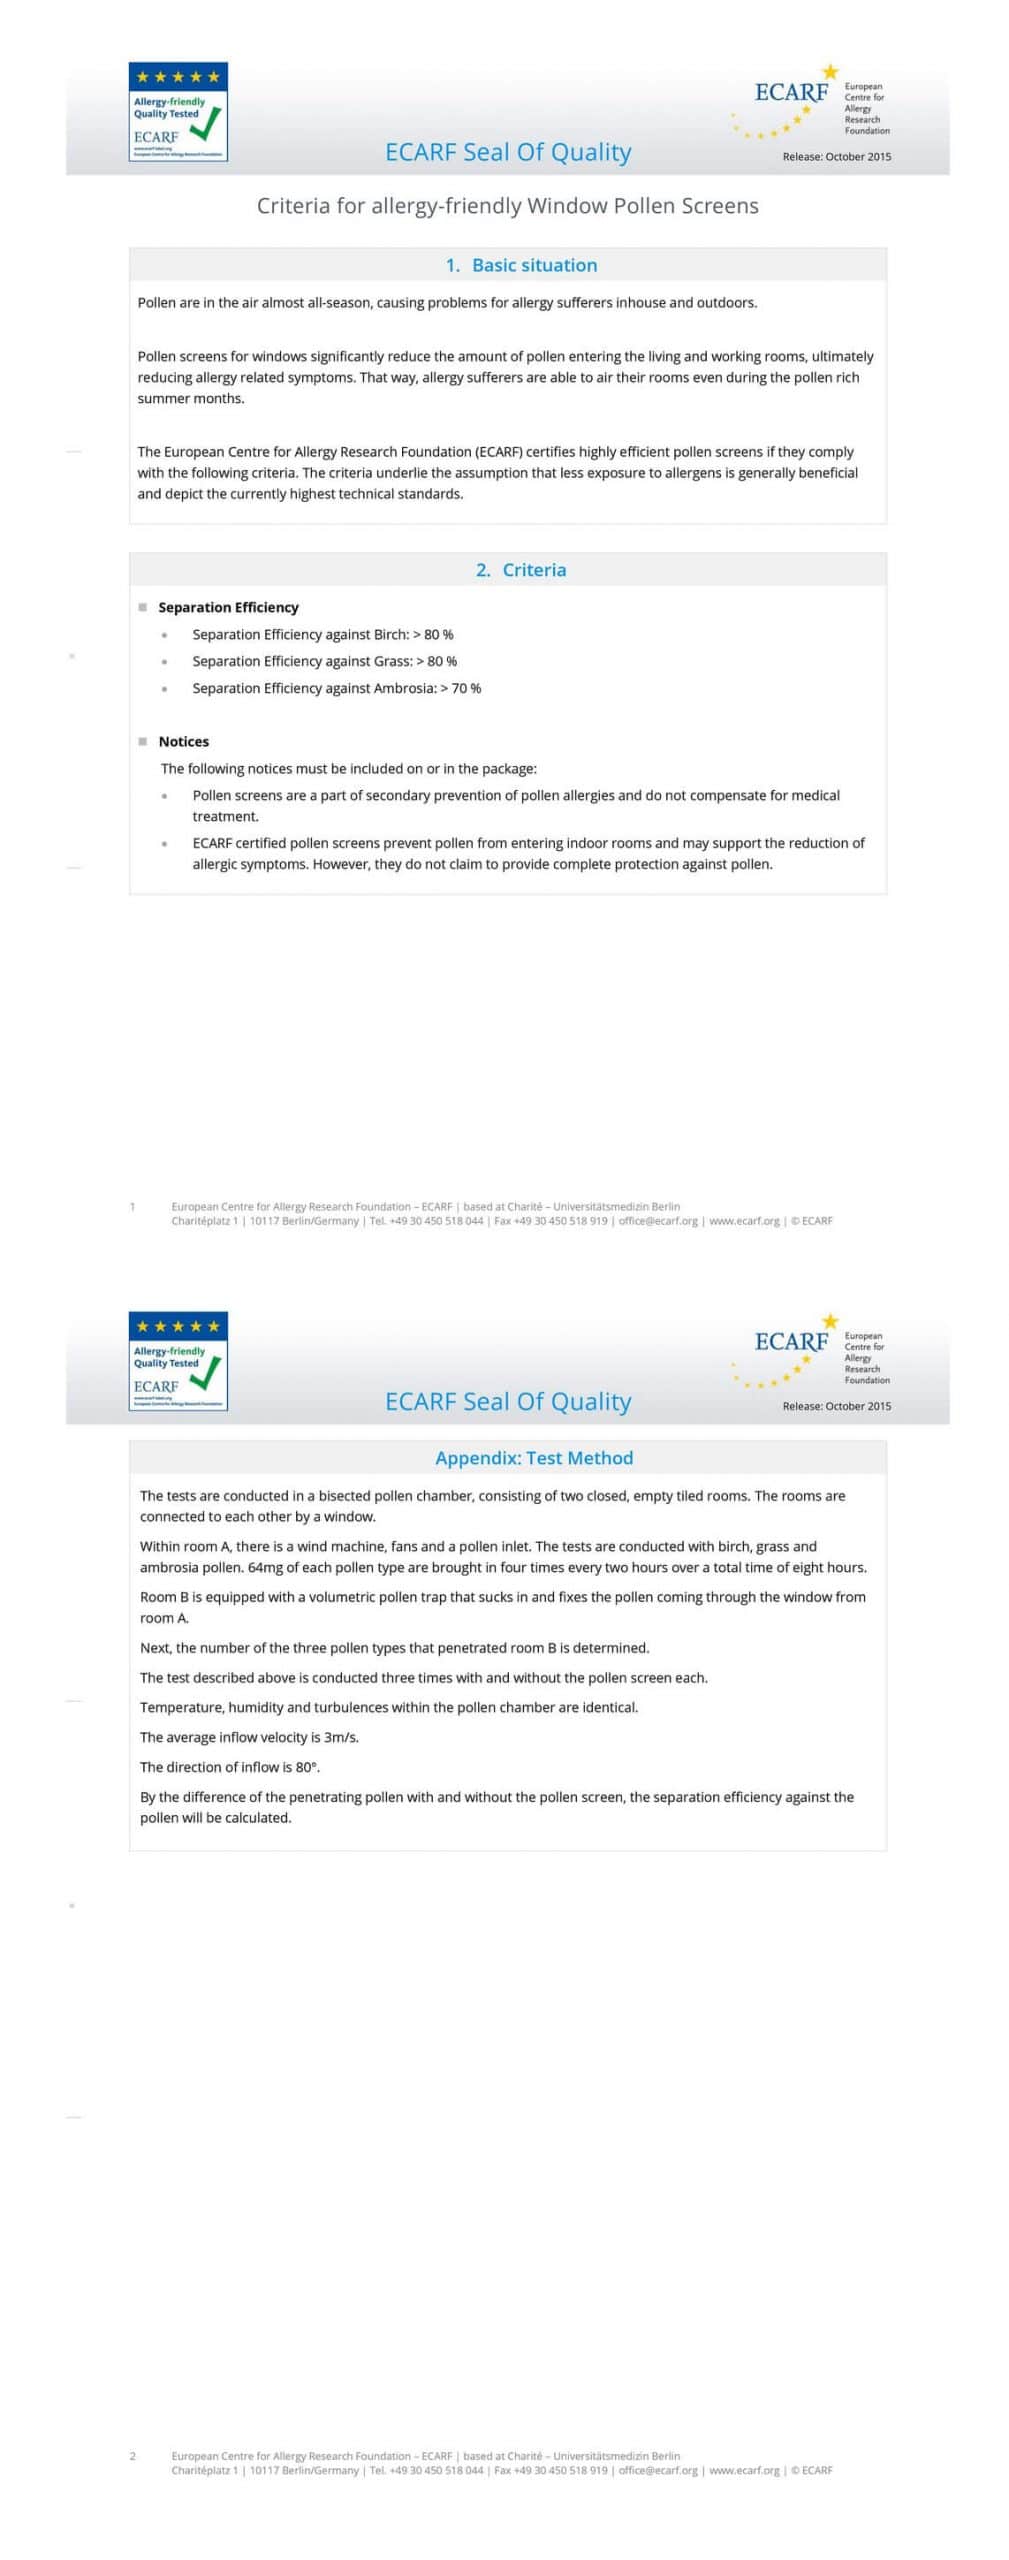 ECARF測試標準說明_ALL-scaled